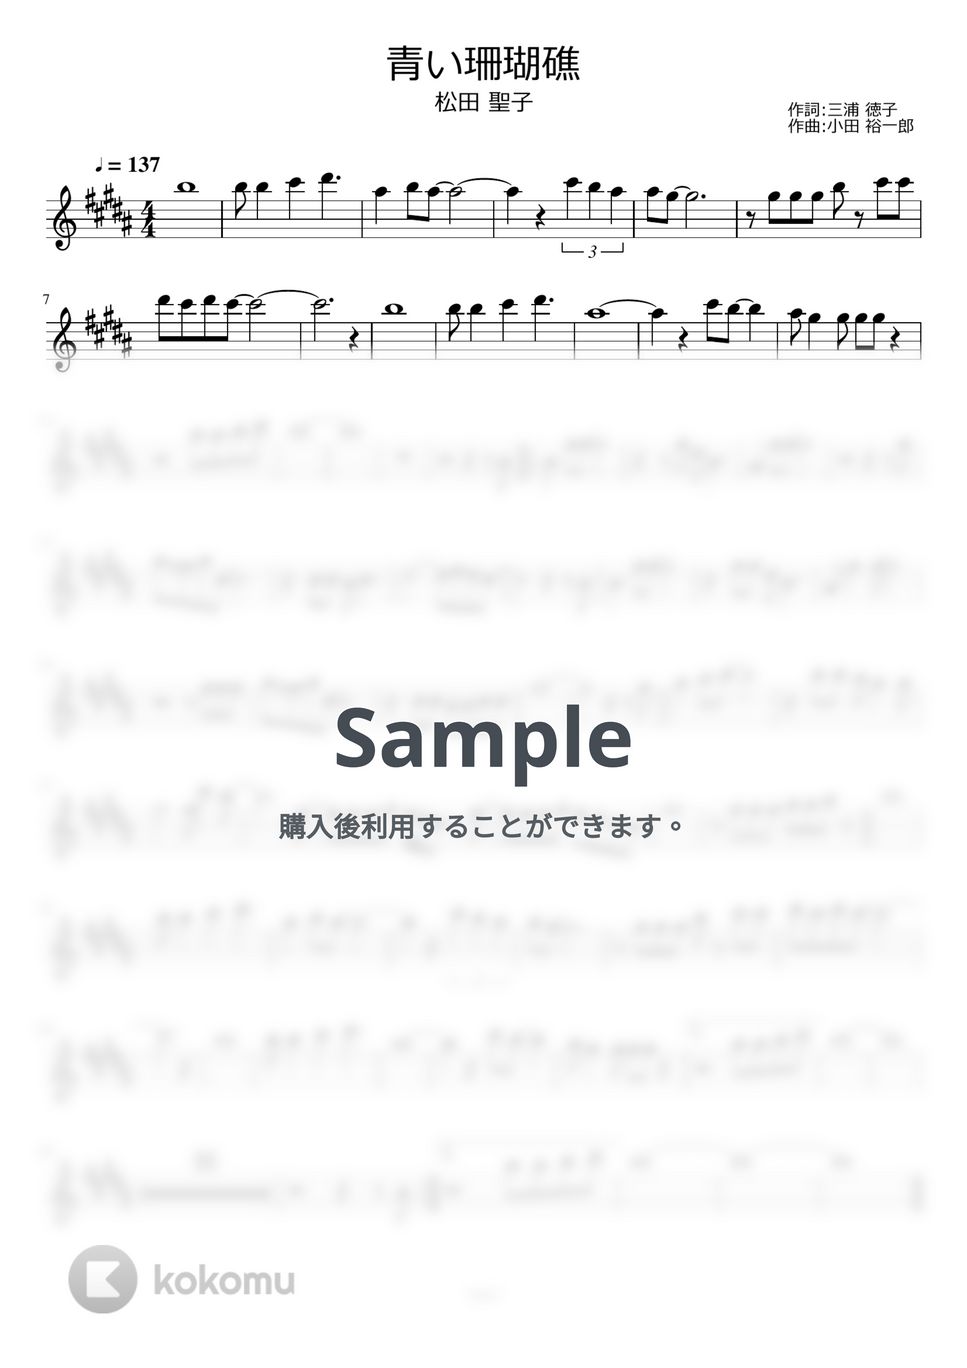 松田聖子 - 青い珊瑚礁 by ayako music school